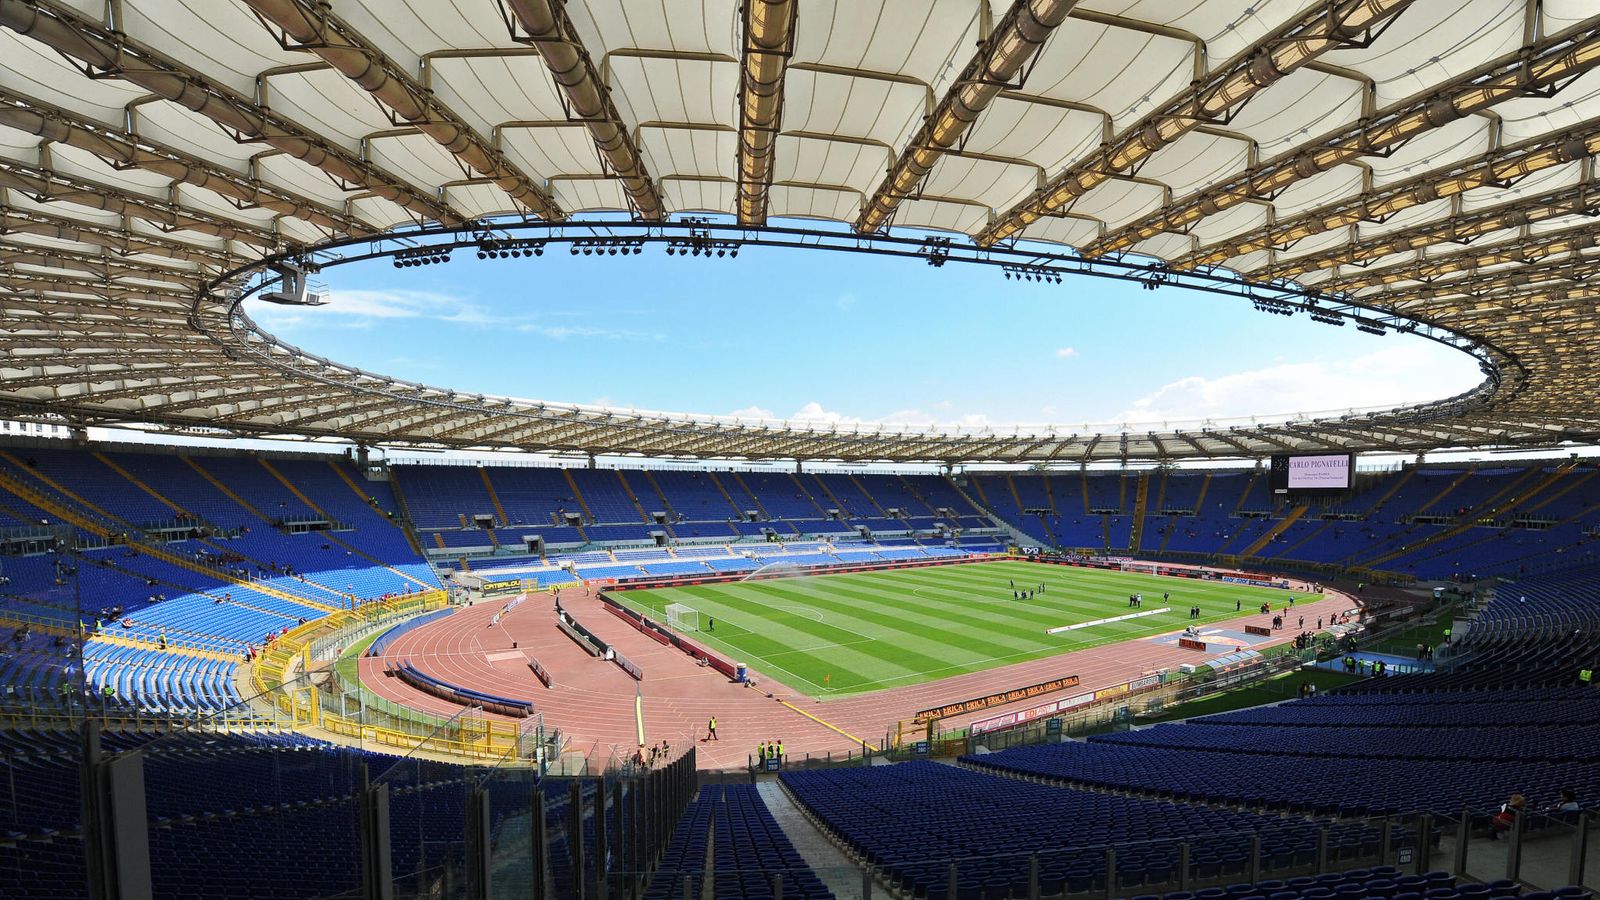 Rome city council strongly backs bid for 2024 Olympics Olympics News